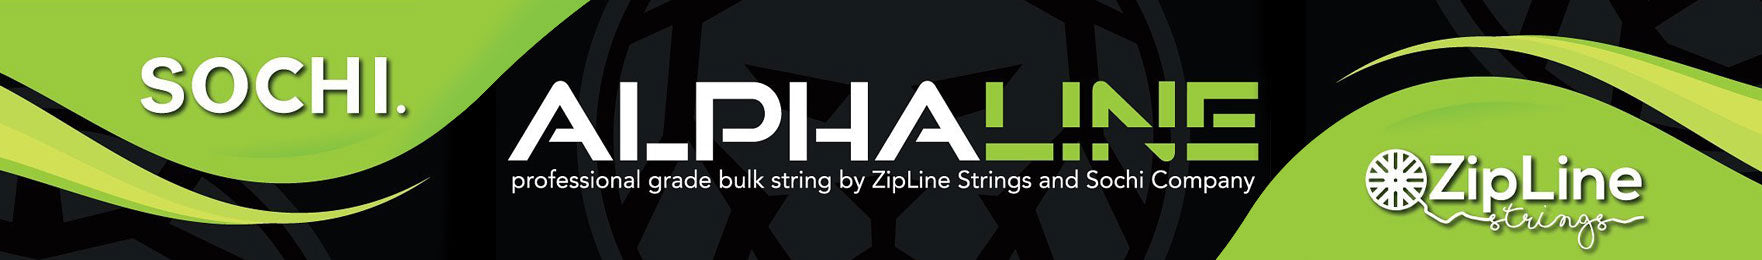 sochi zipline alphaline string